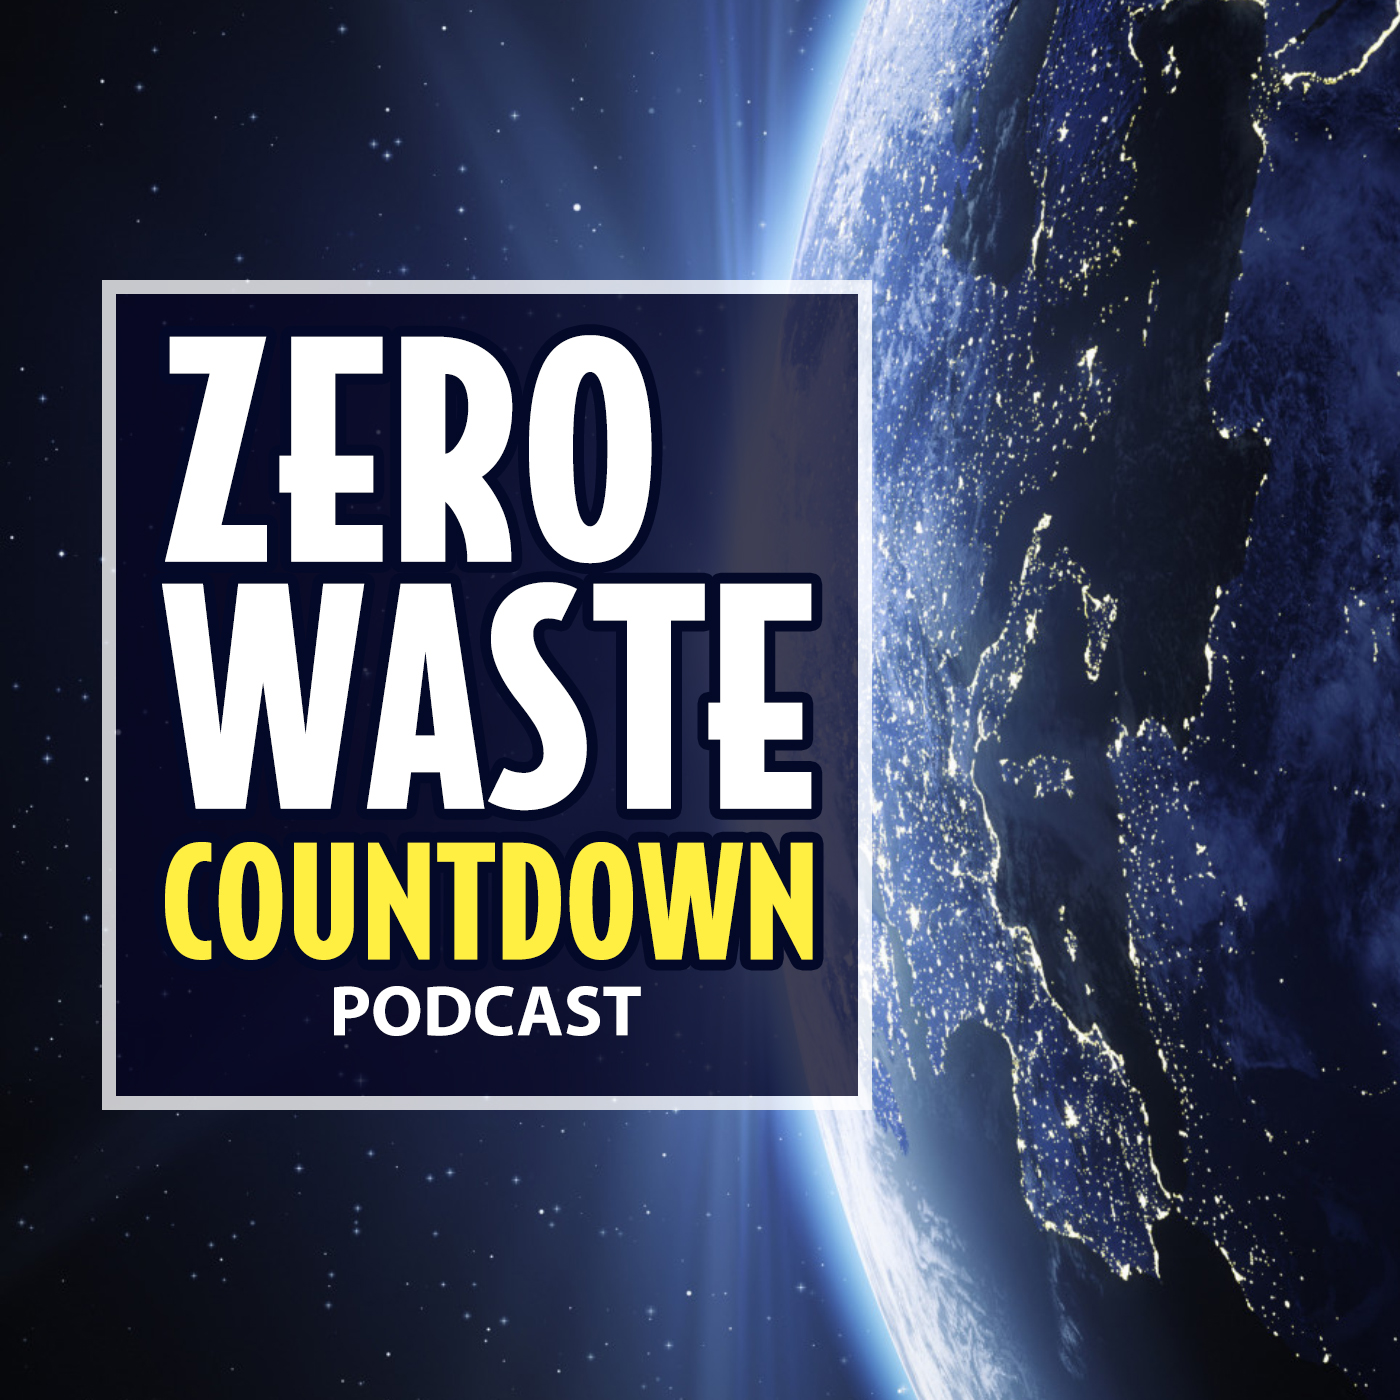 The Zero Waste Countdown Podcast